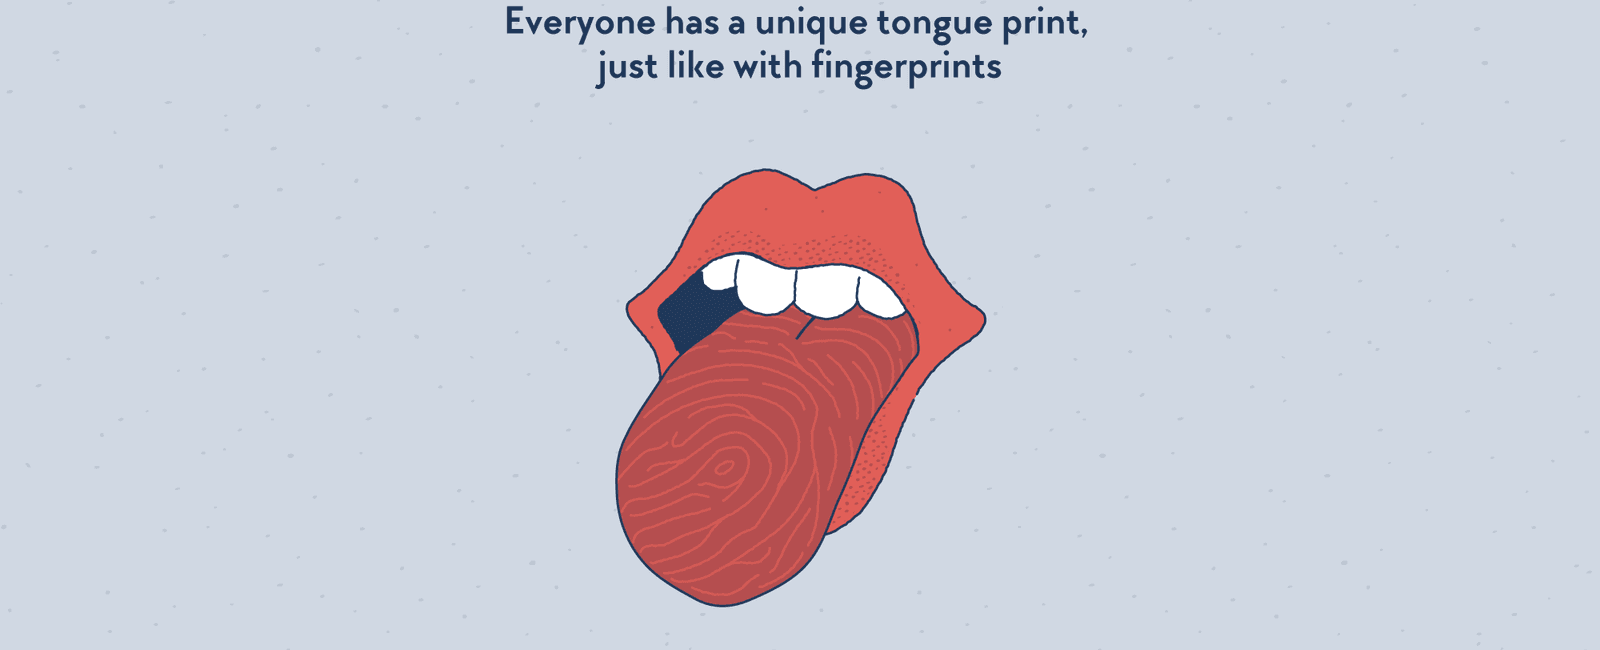 Like fingerprints everyone s tongue print is different